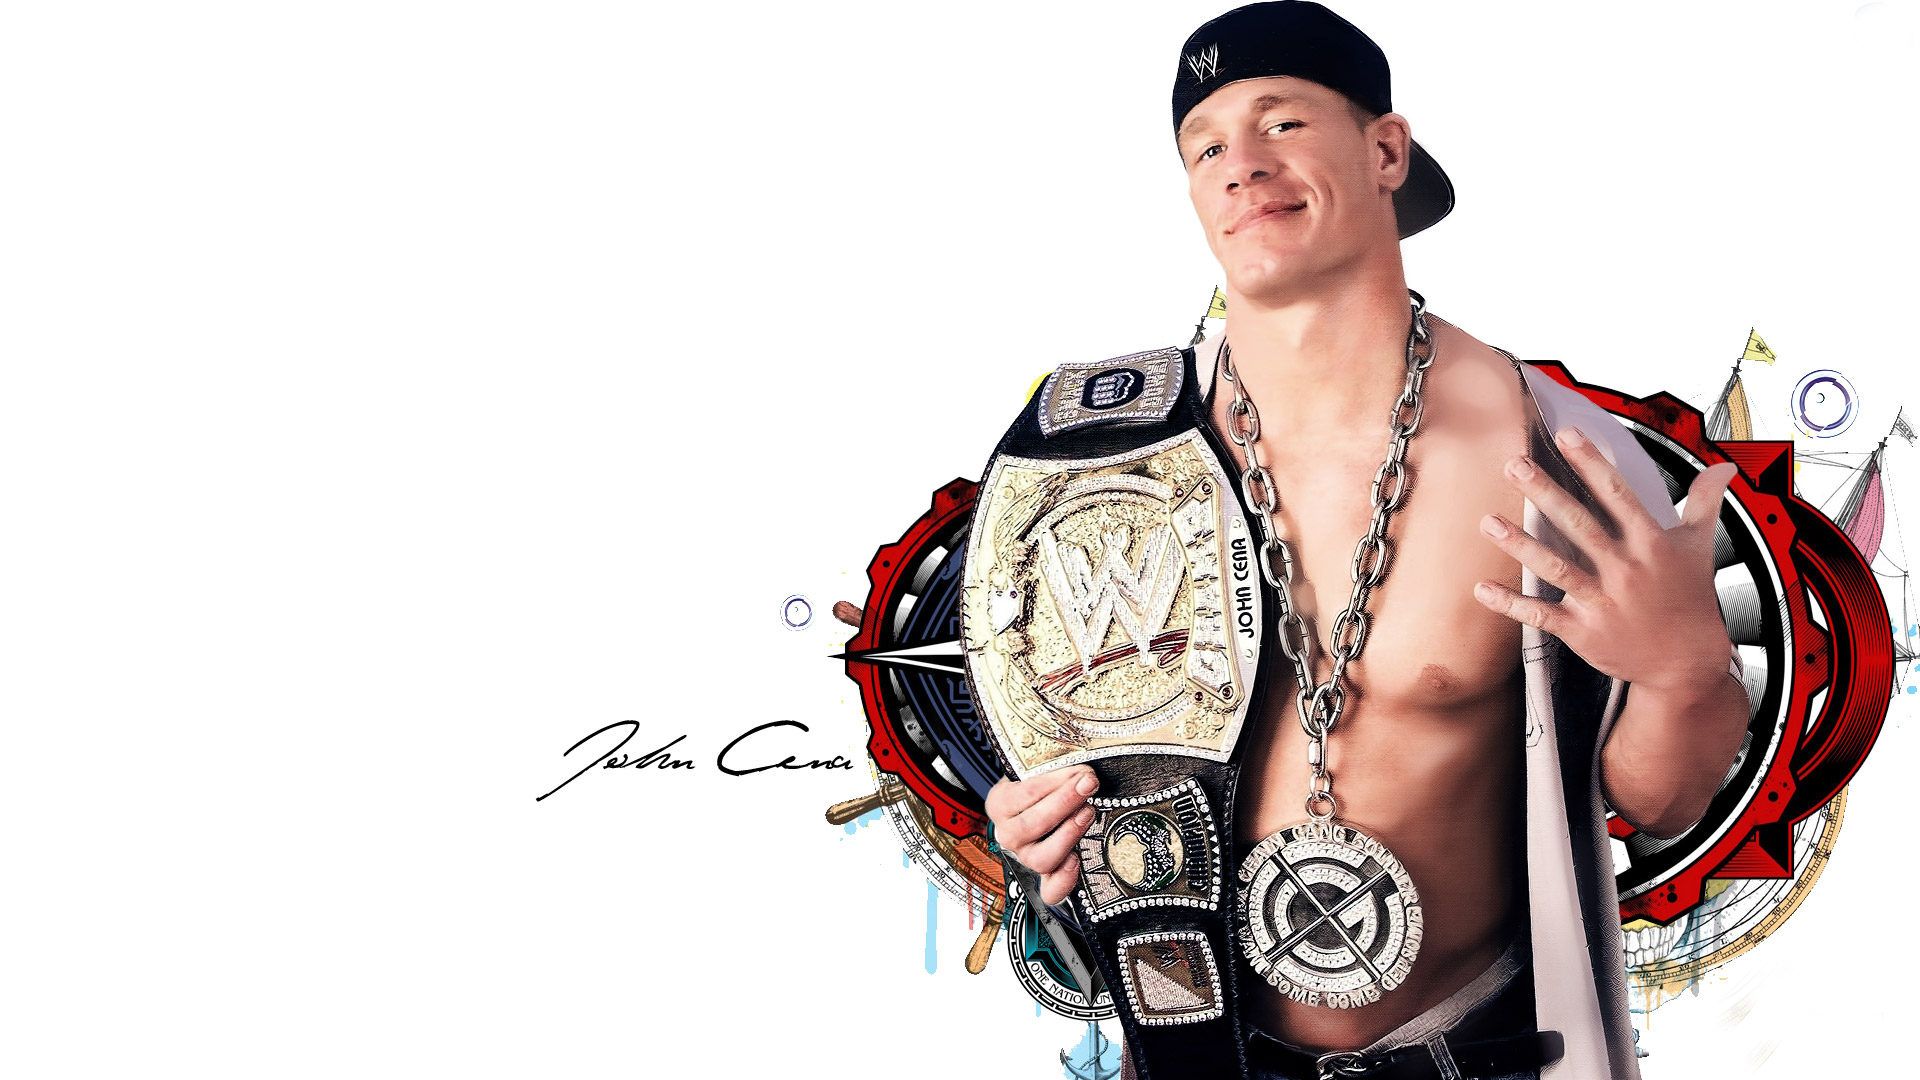 Cena The Marine Wwe Championship Monday Night Raw